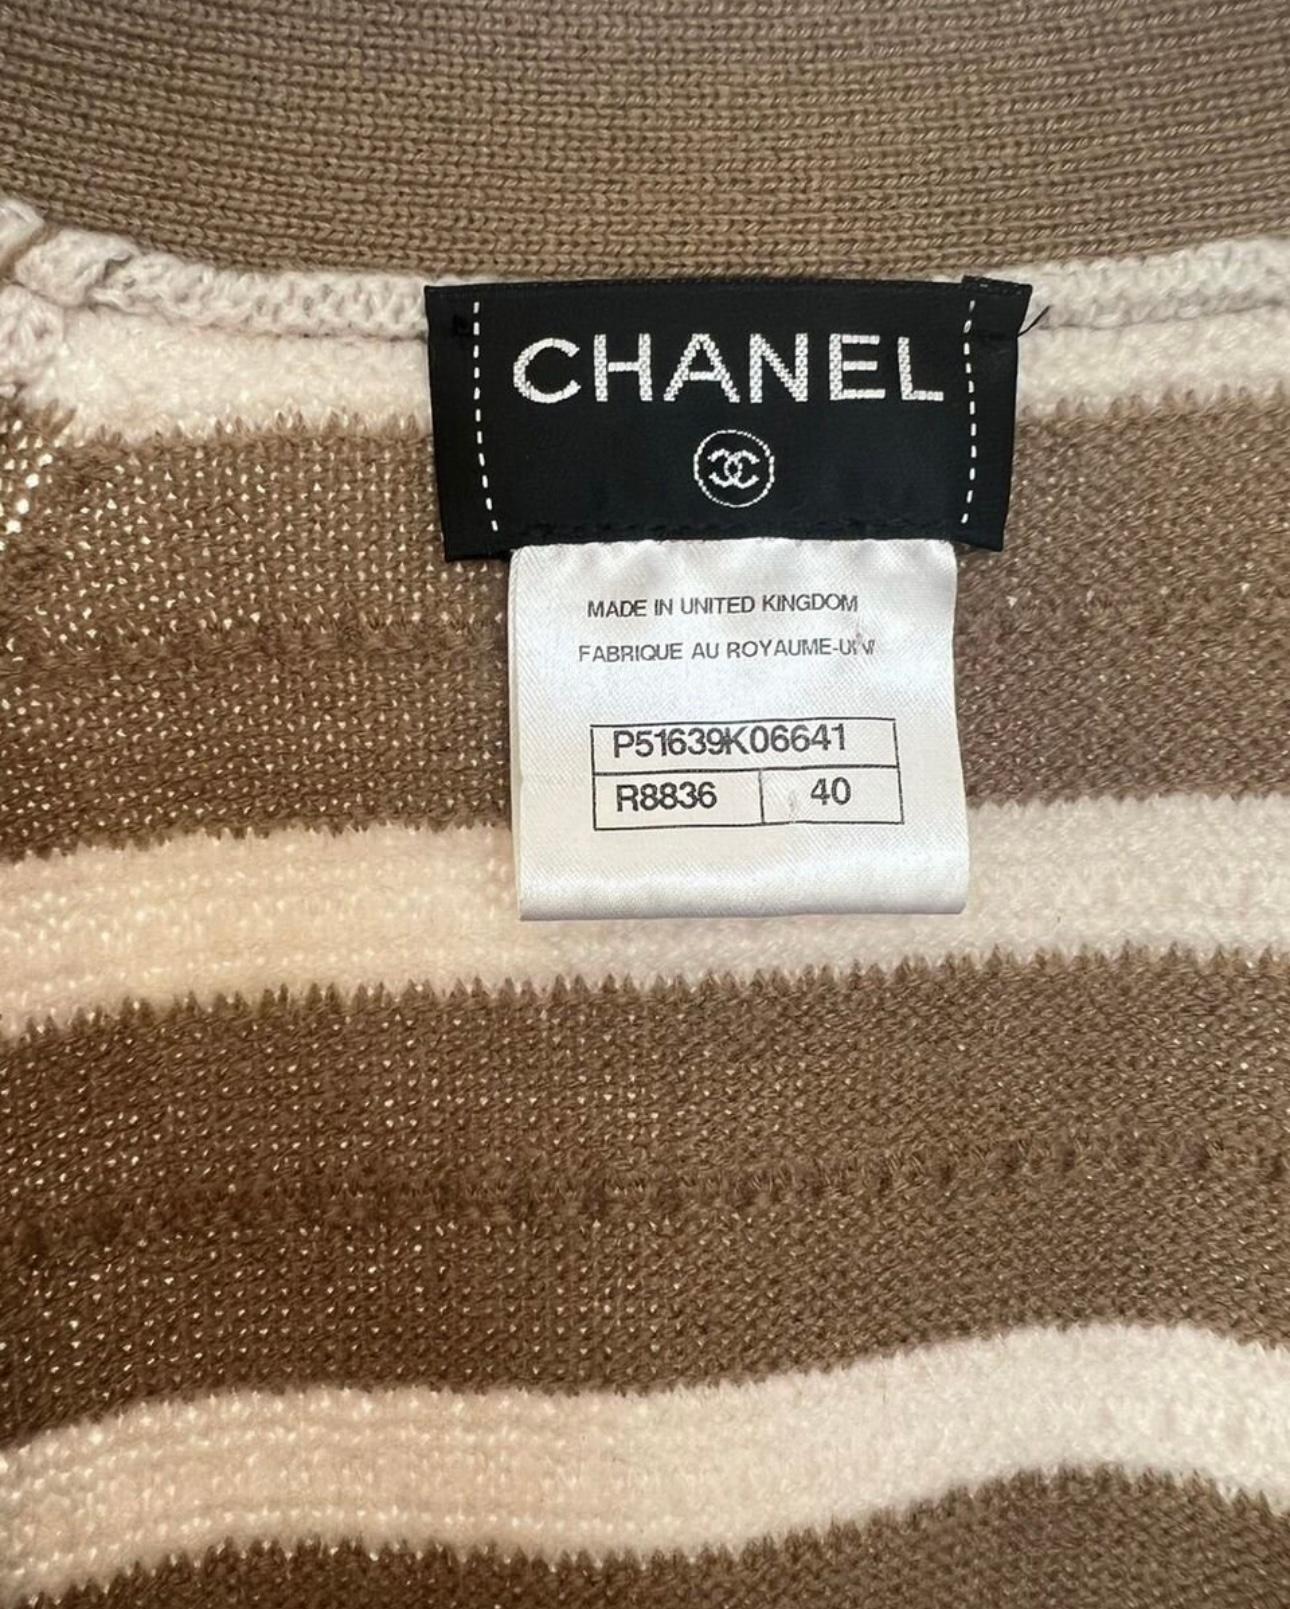 Chanel Iconic Gisele Bundchen Ad Campaign Cashmere Cardi Coat 8